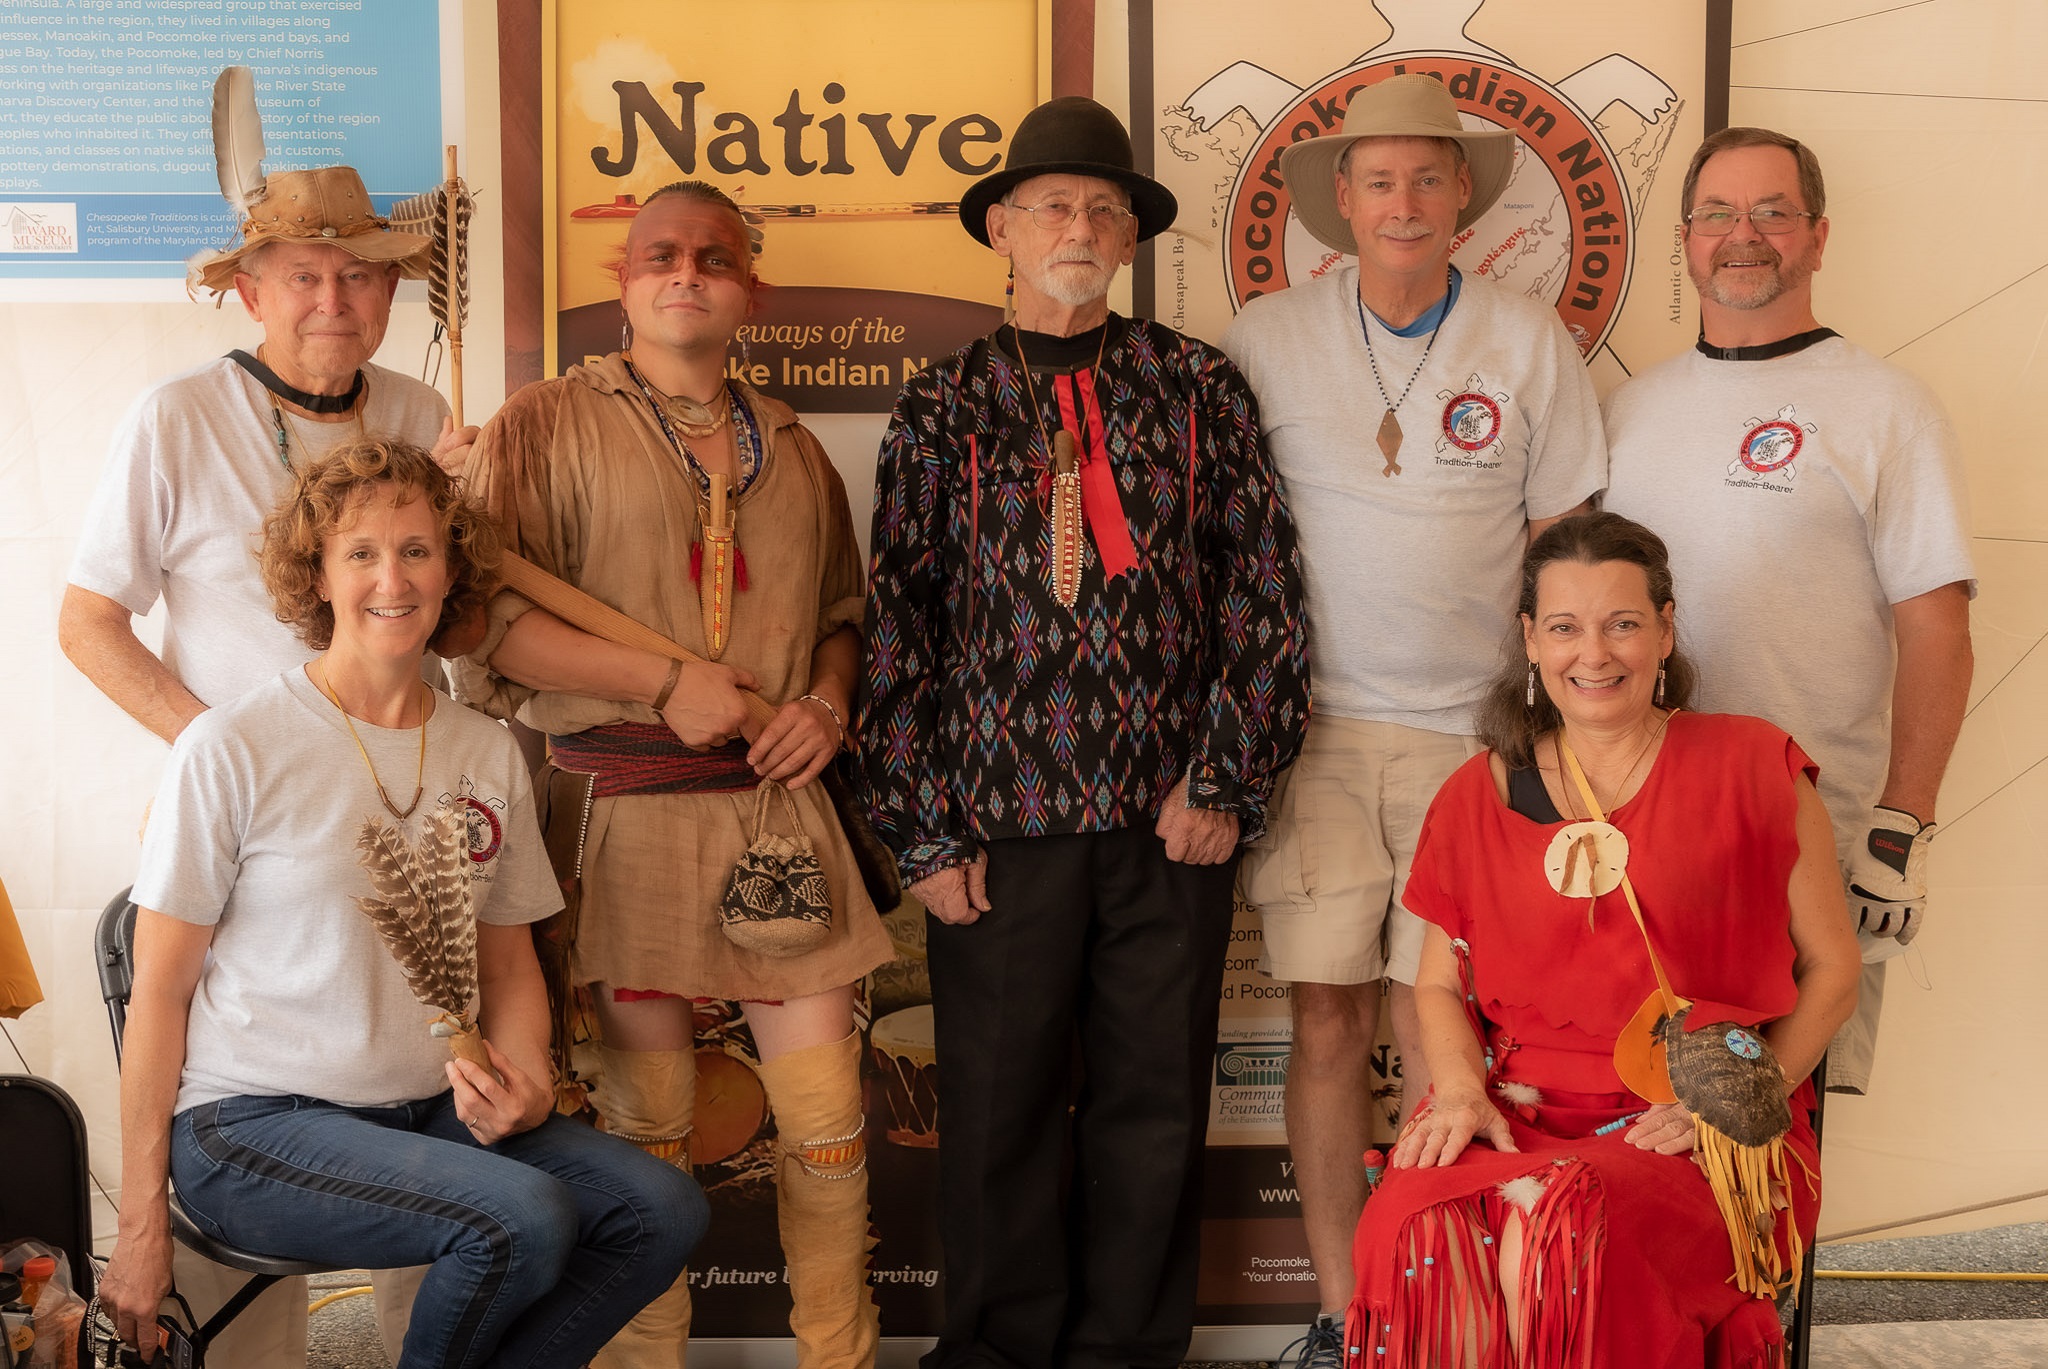 Pocomoke Indian Nation Presenters at National Folk Festival
Photograph taken by John Brinton 
2021